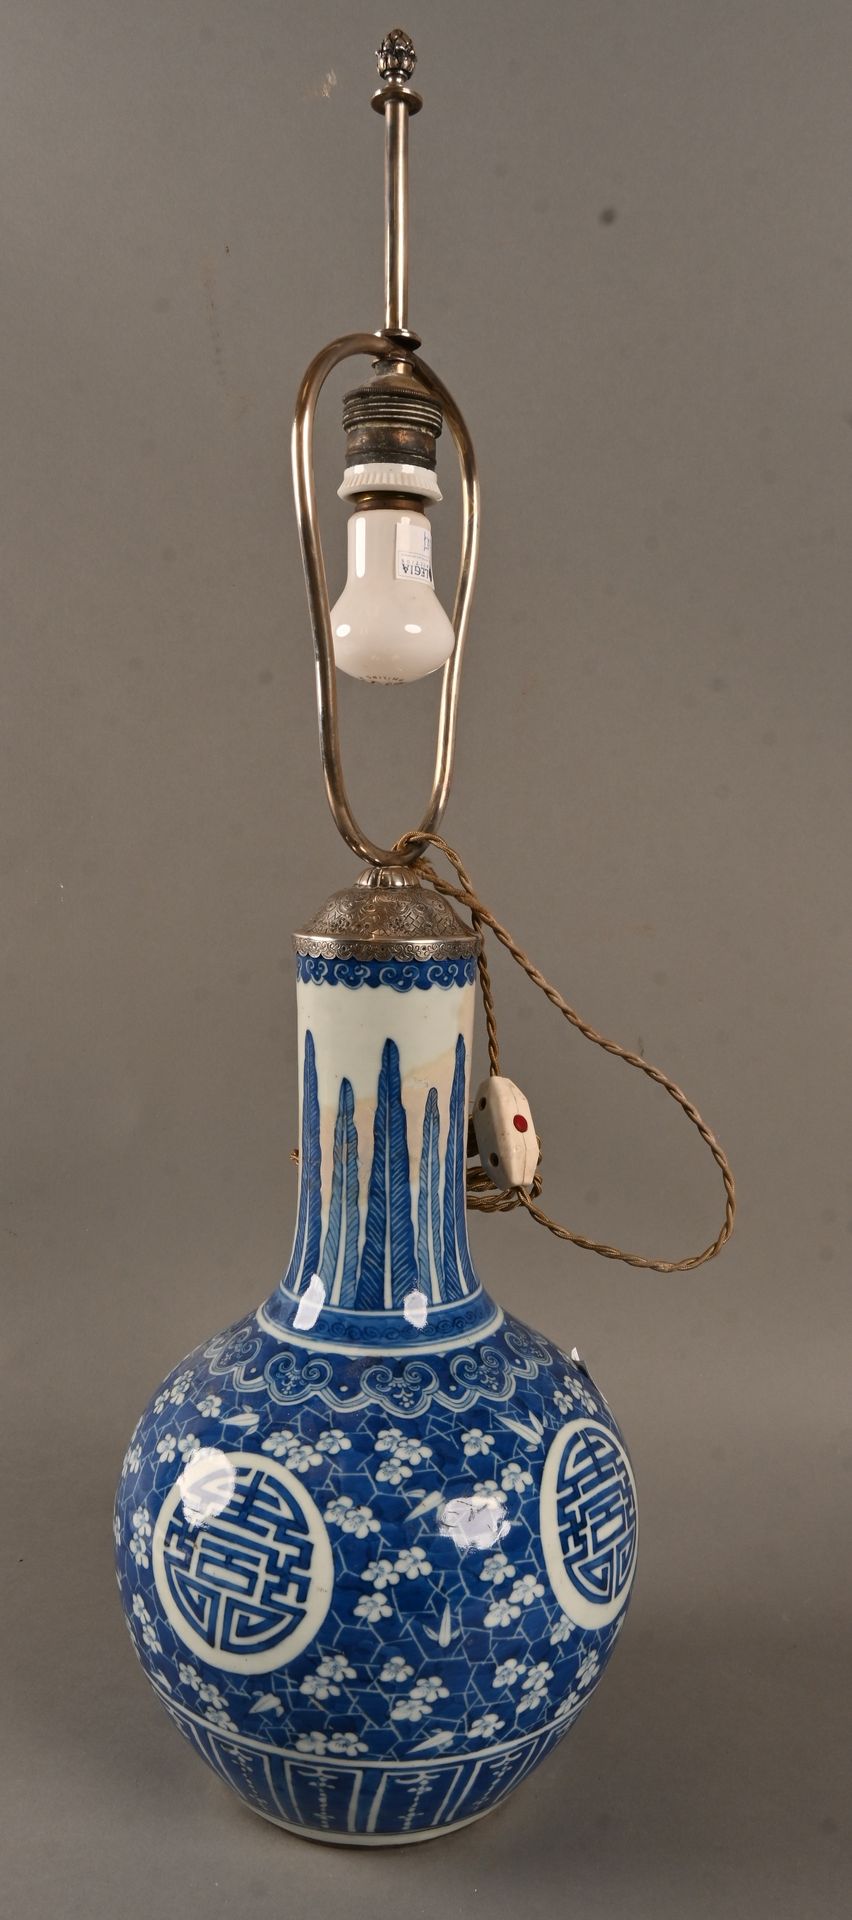 Vase ovoïde en porcelaine de Chine 中国.
中国瓷器卵形花瓶，有蓝色釉下装饰。
被安装成一盏灯。
意外 - 缺少和旧的修复。
&hellip;